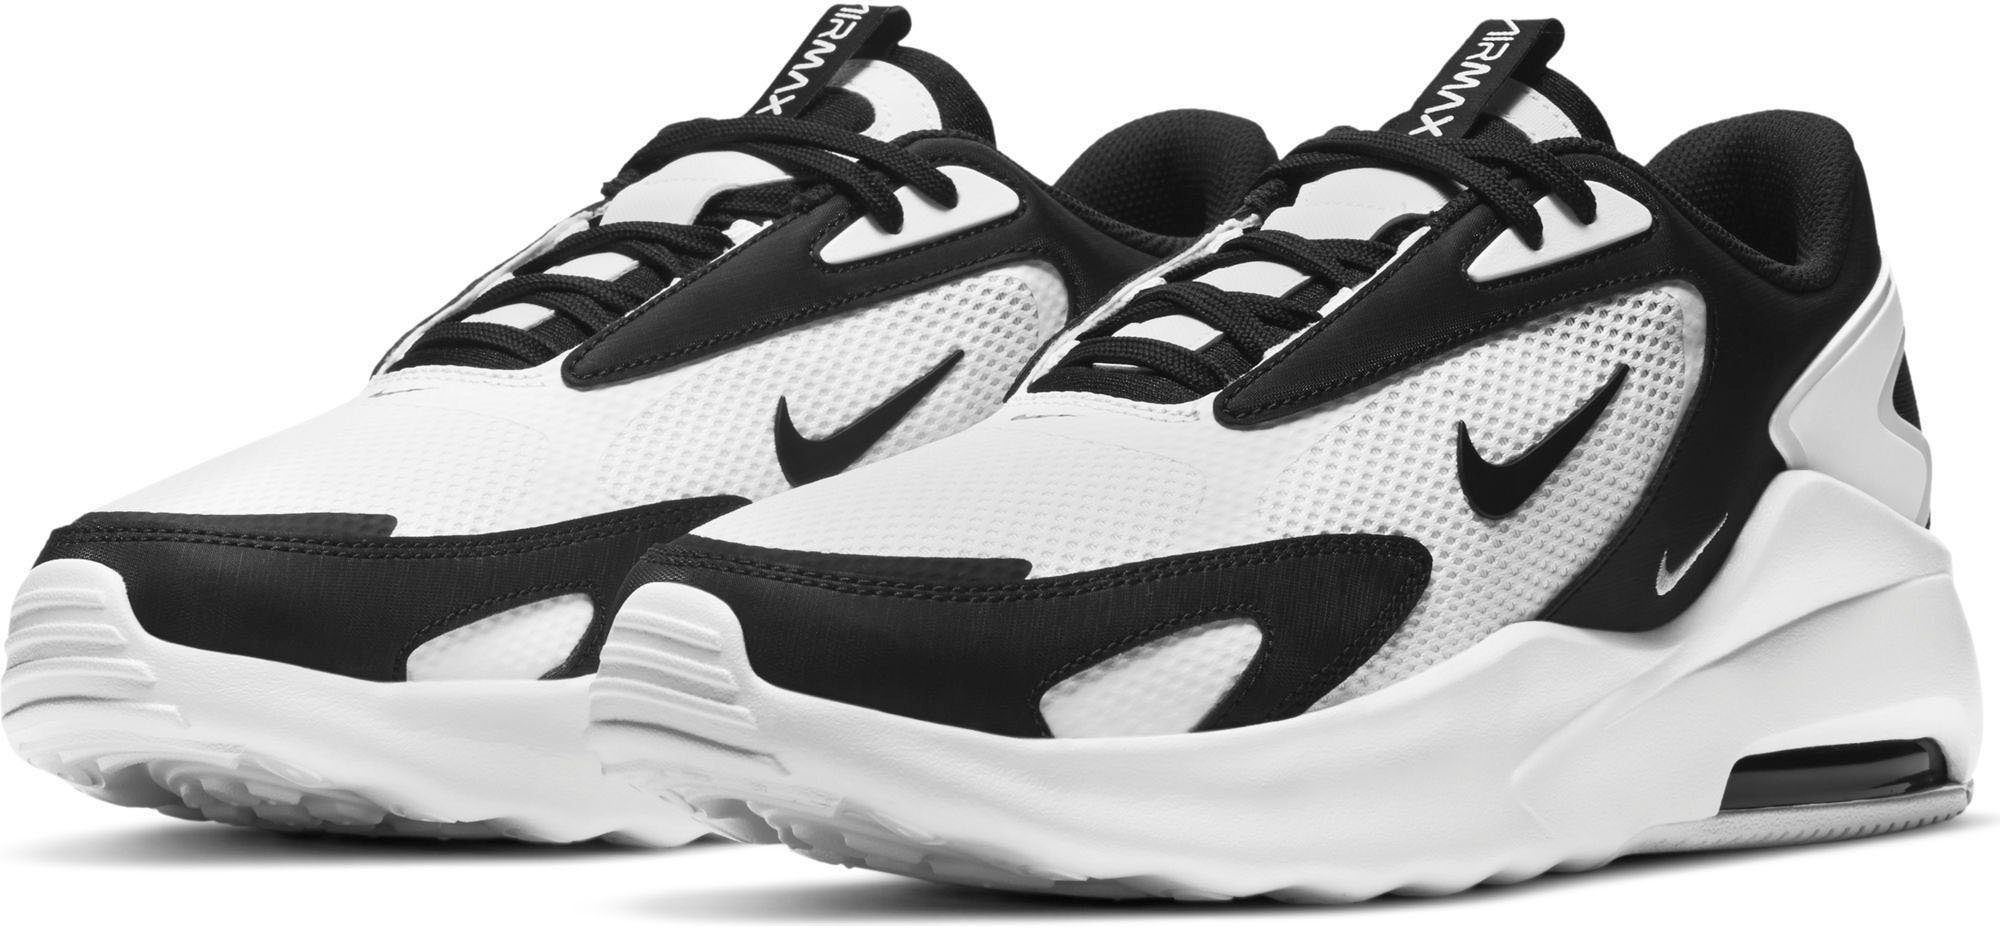 Nike Sportswear »AIR MAX BOLT« Sneaker kaufen | OTTO